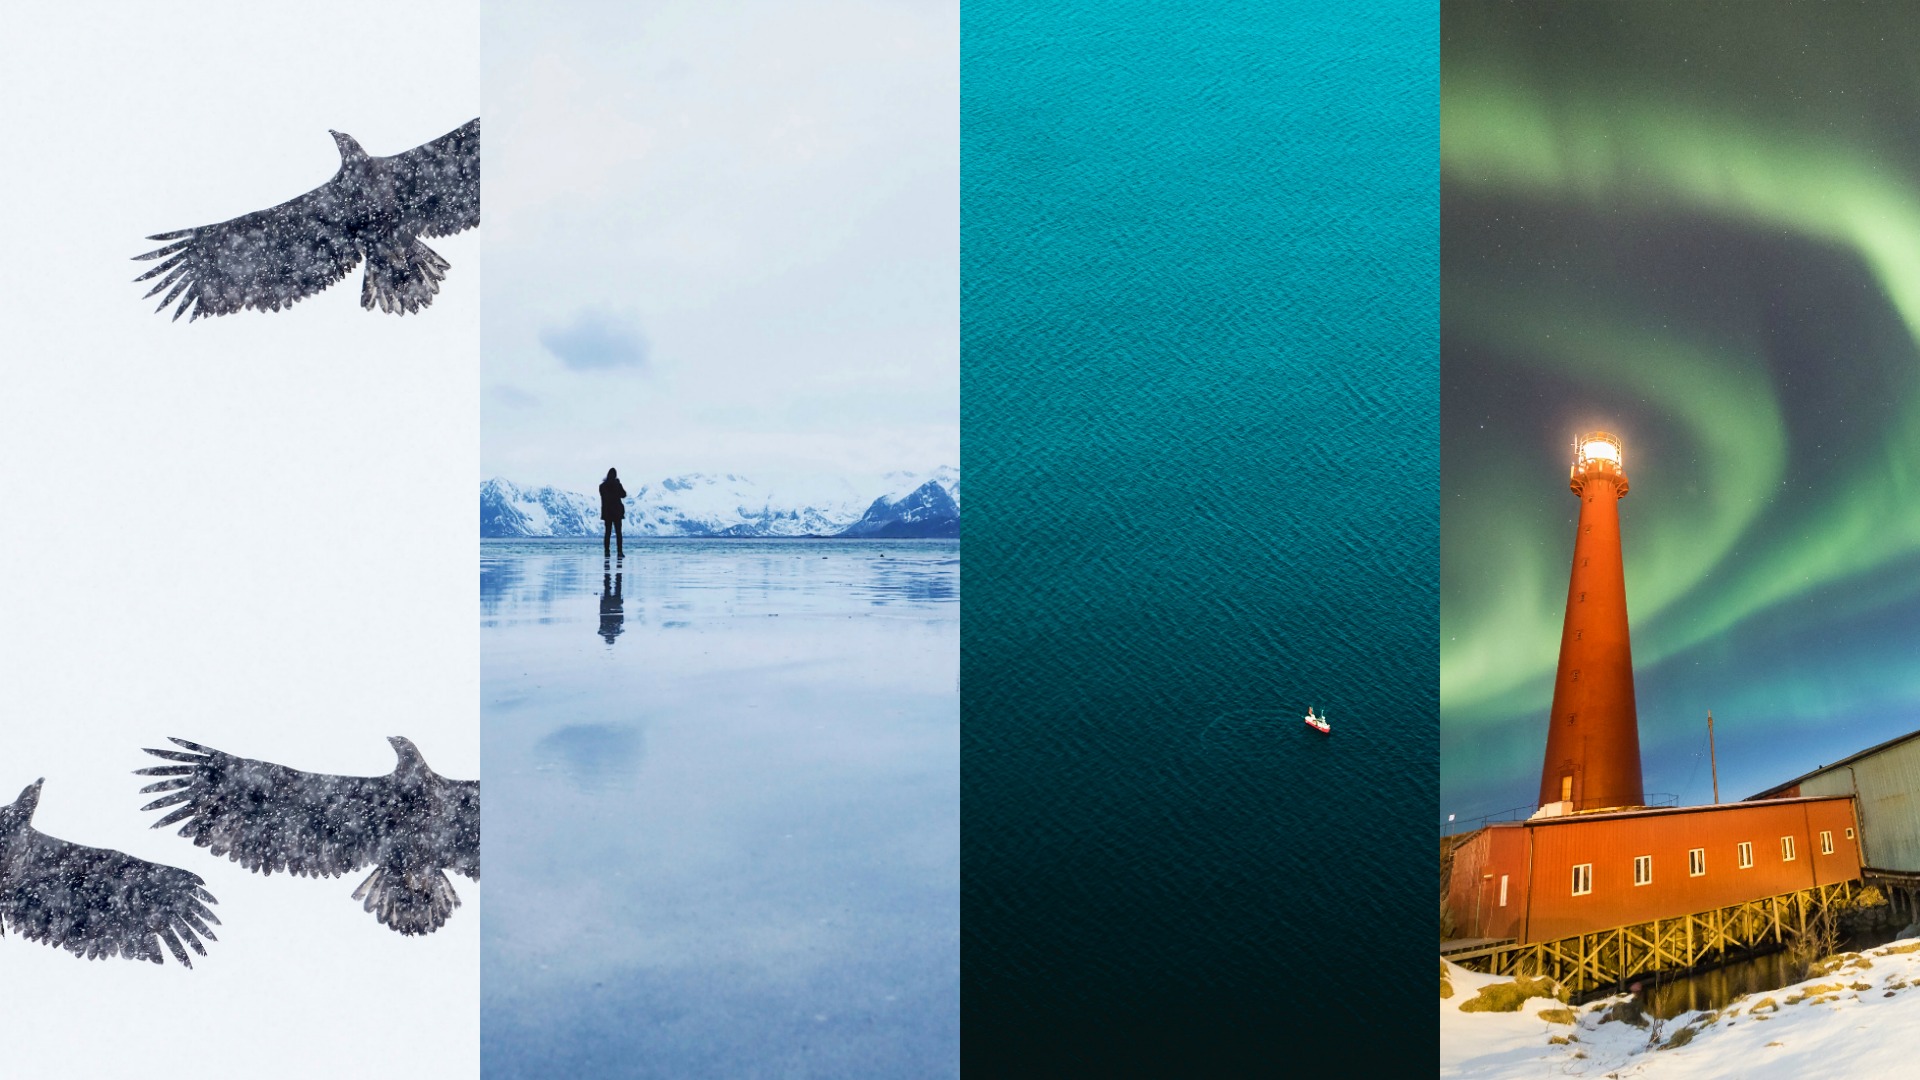 #WAYNRTH: 4 photographers capture the Lotofen Islands